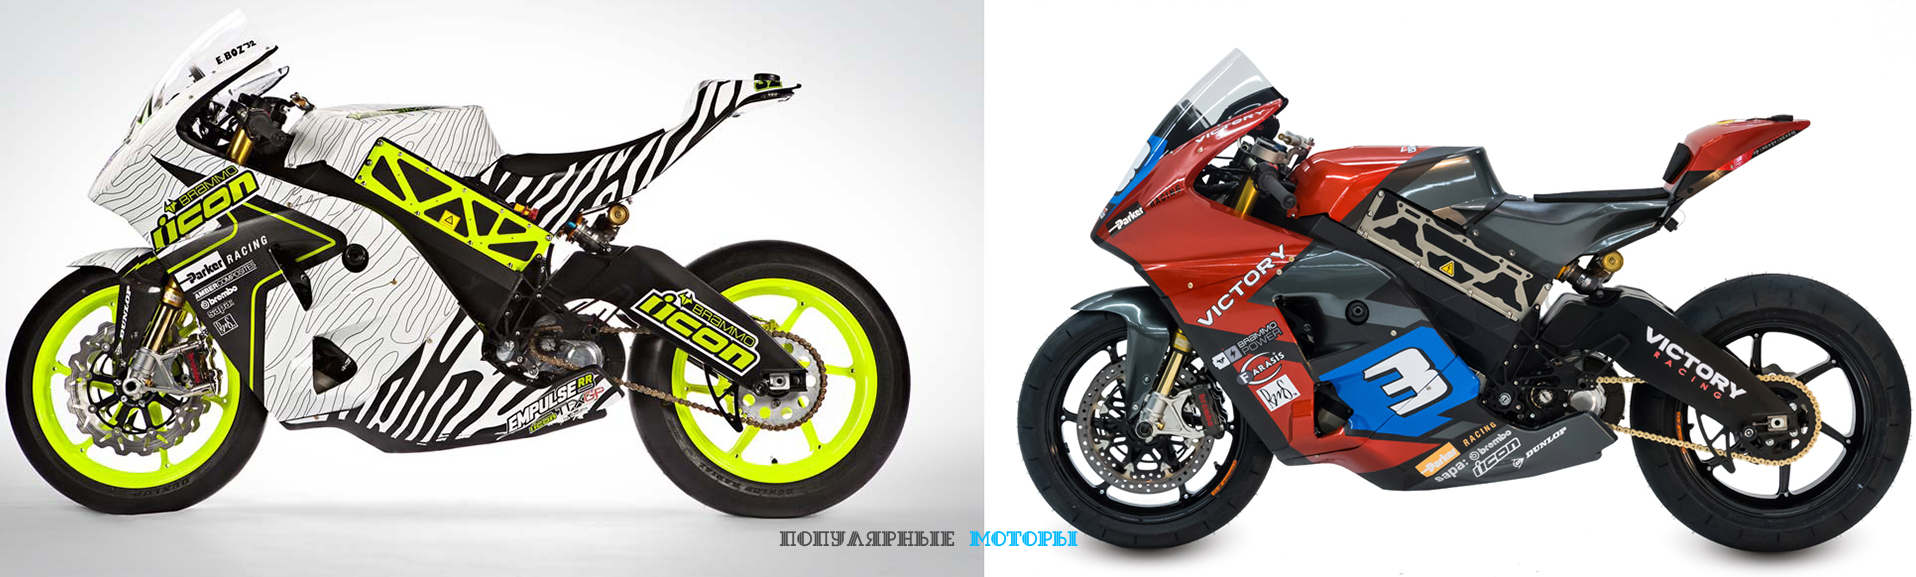 Компания Victory представит прототип электрического мотоцикла на гонке Isle Of Man TT